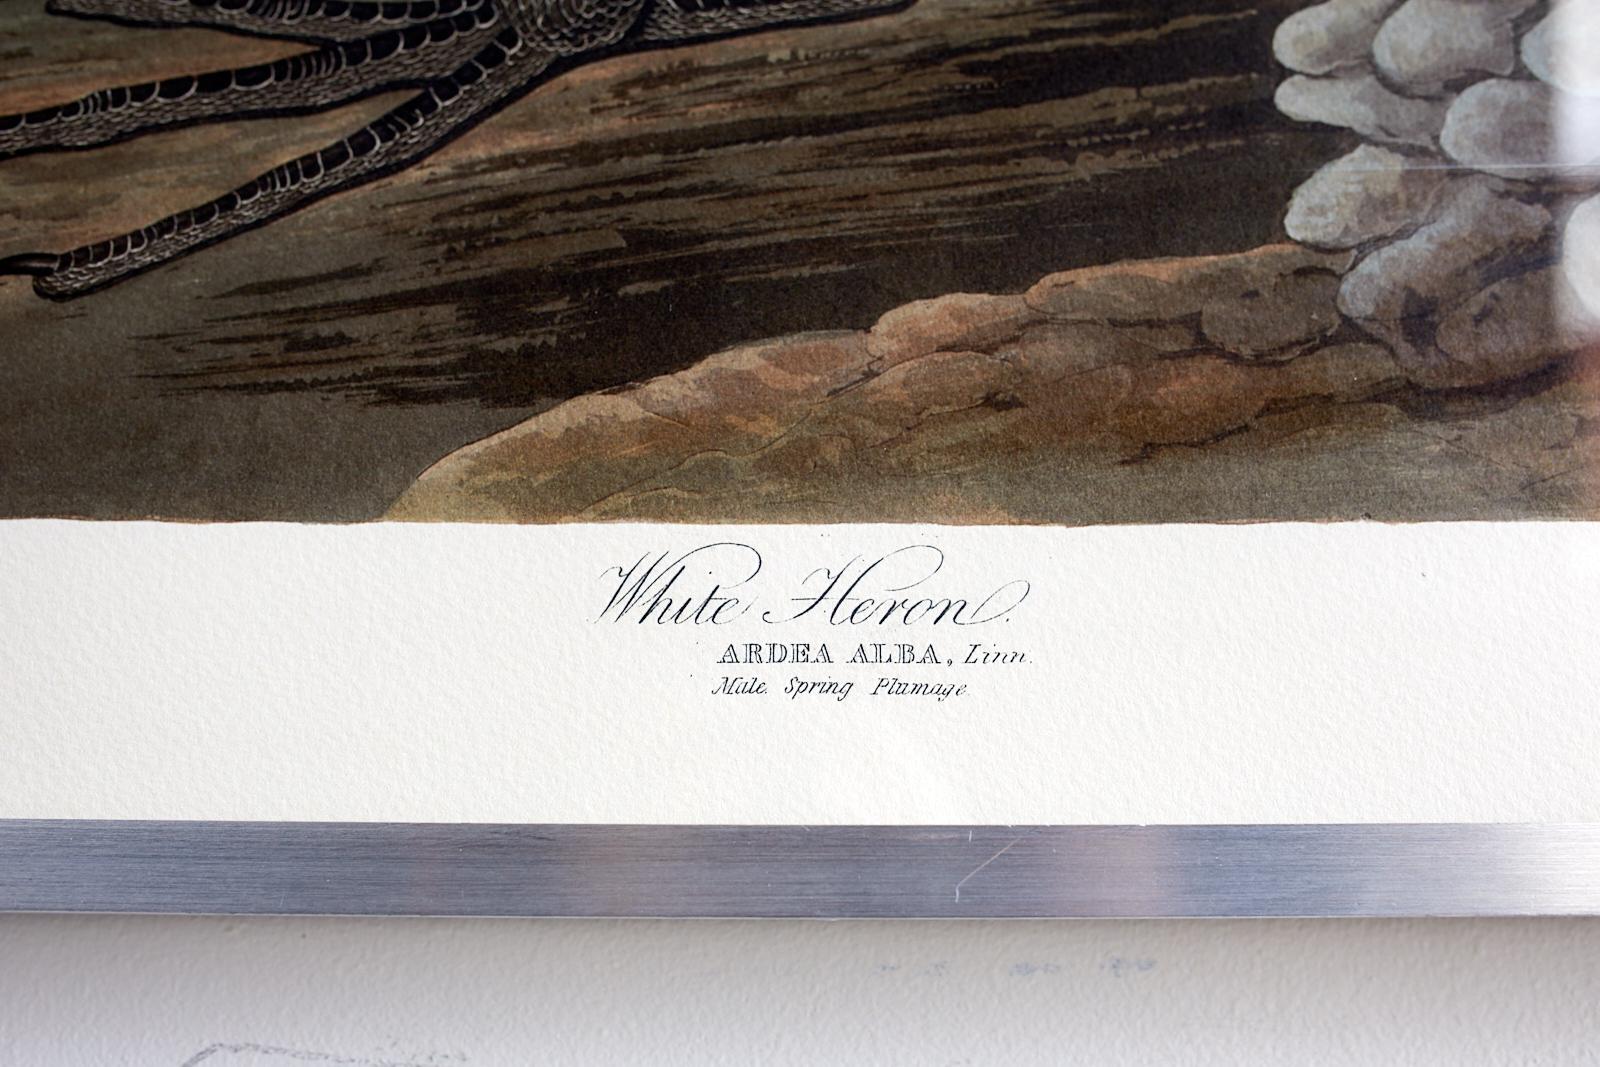 Steel Audubon White Heron Plate #386 Havell